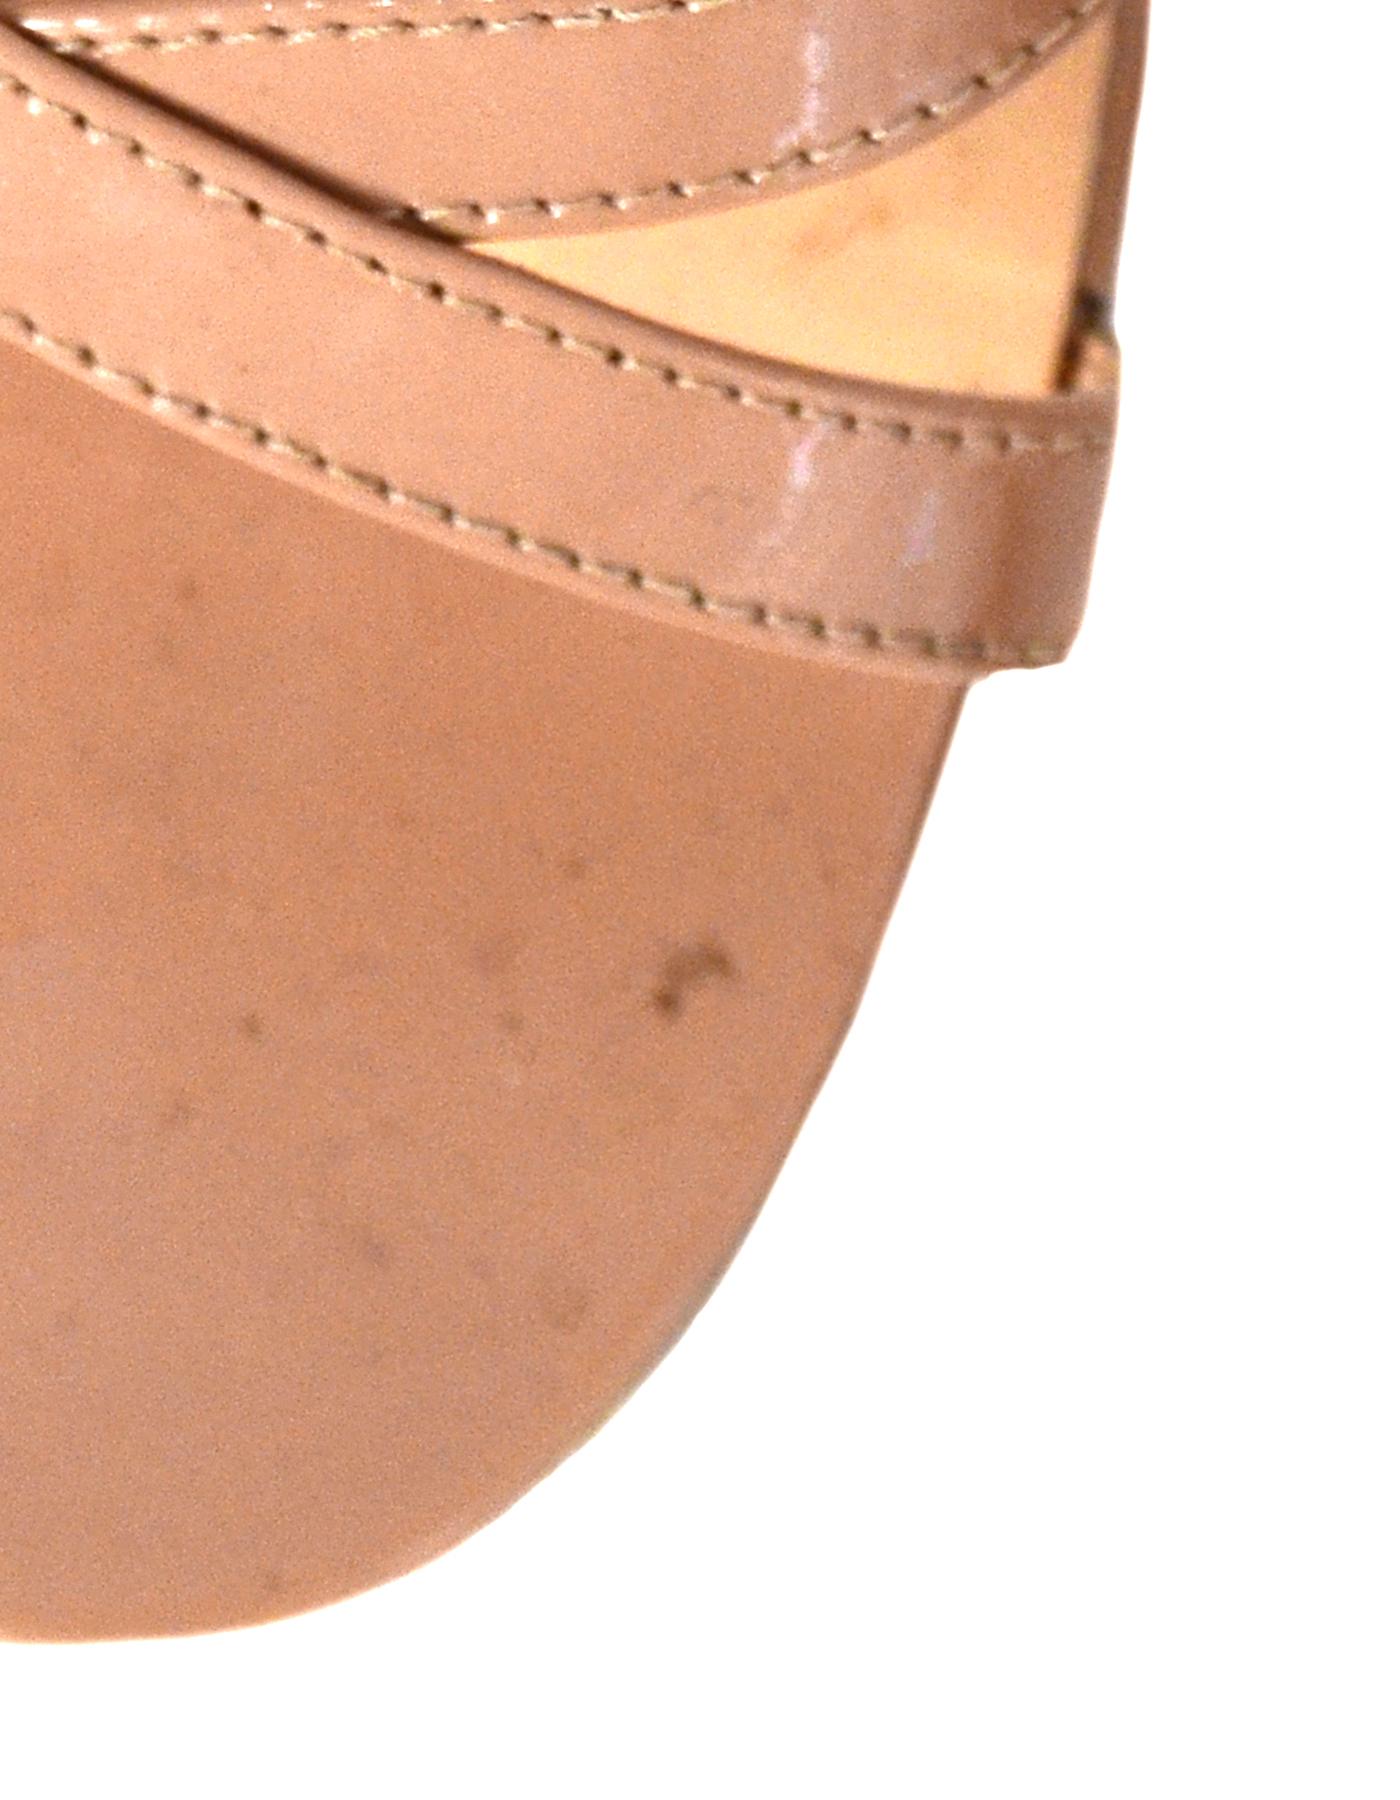 Beige Manolo Blahnik Nude Patent Leather Strappy Heel Sandals Sz 35.5